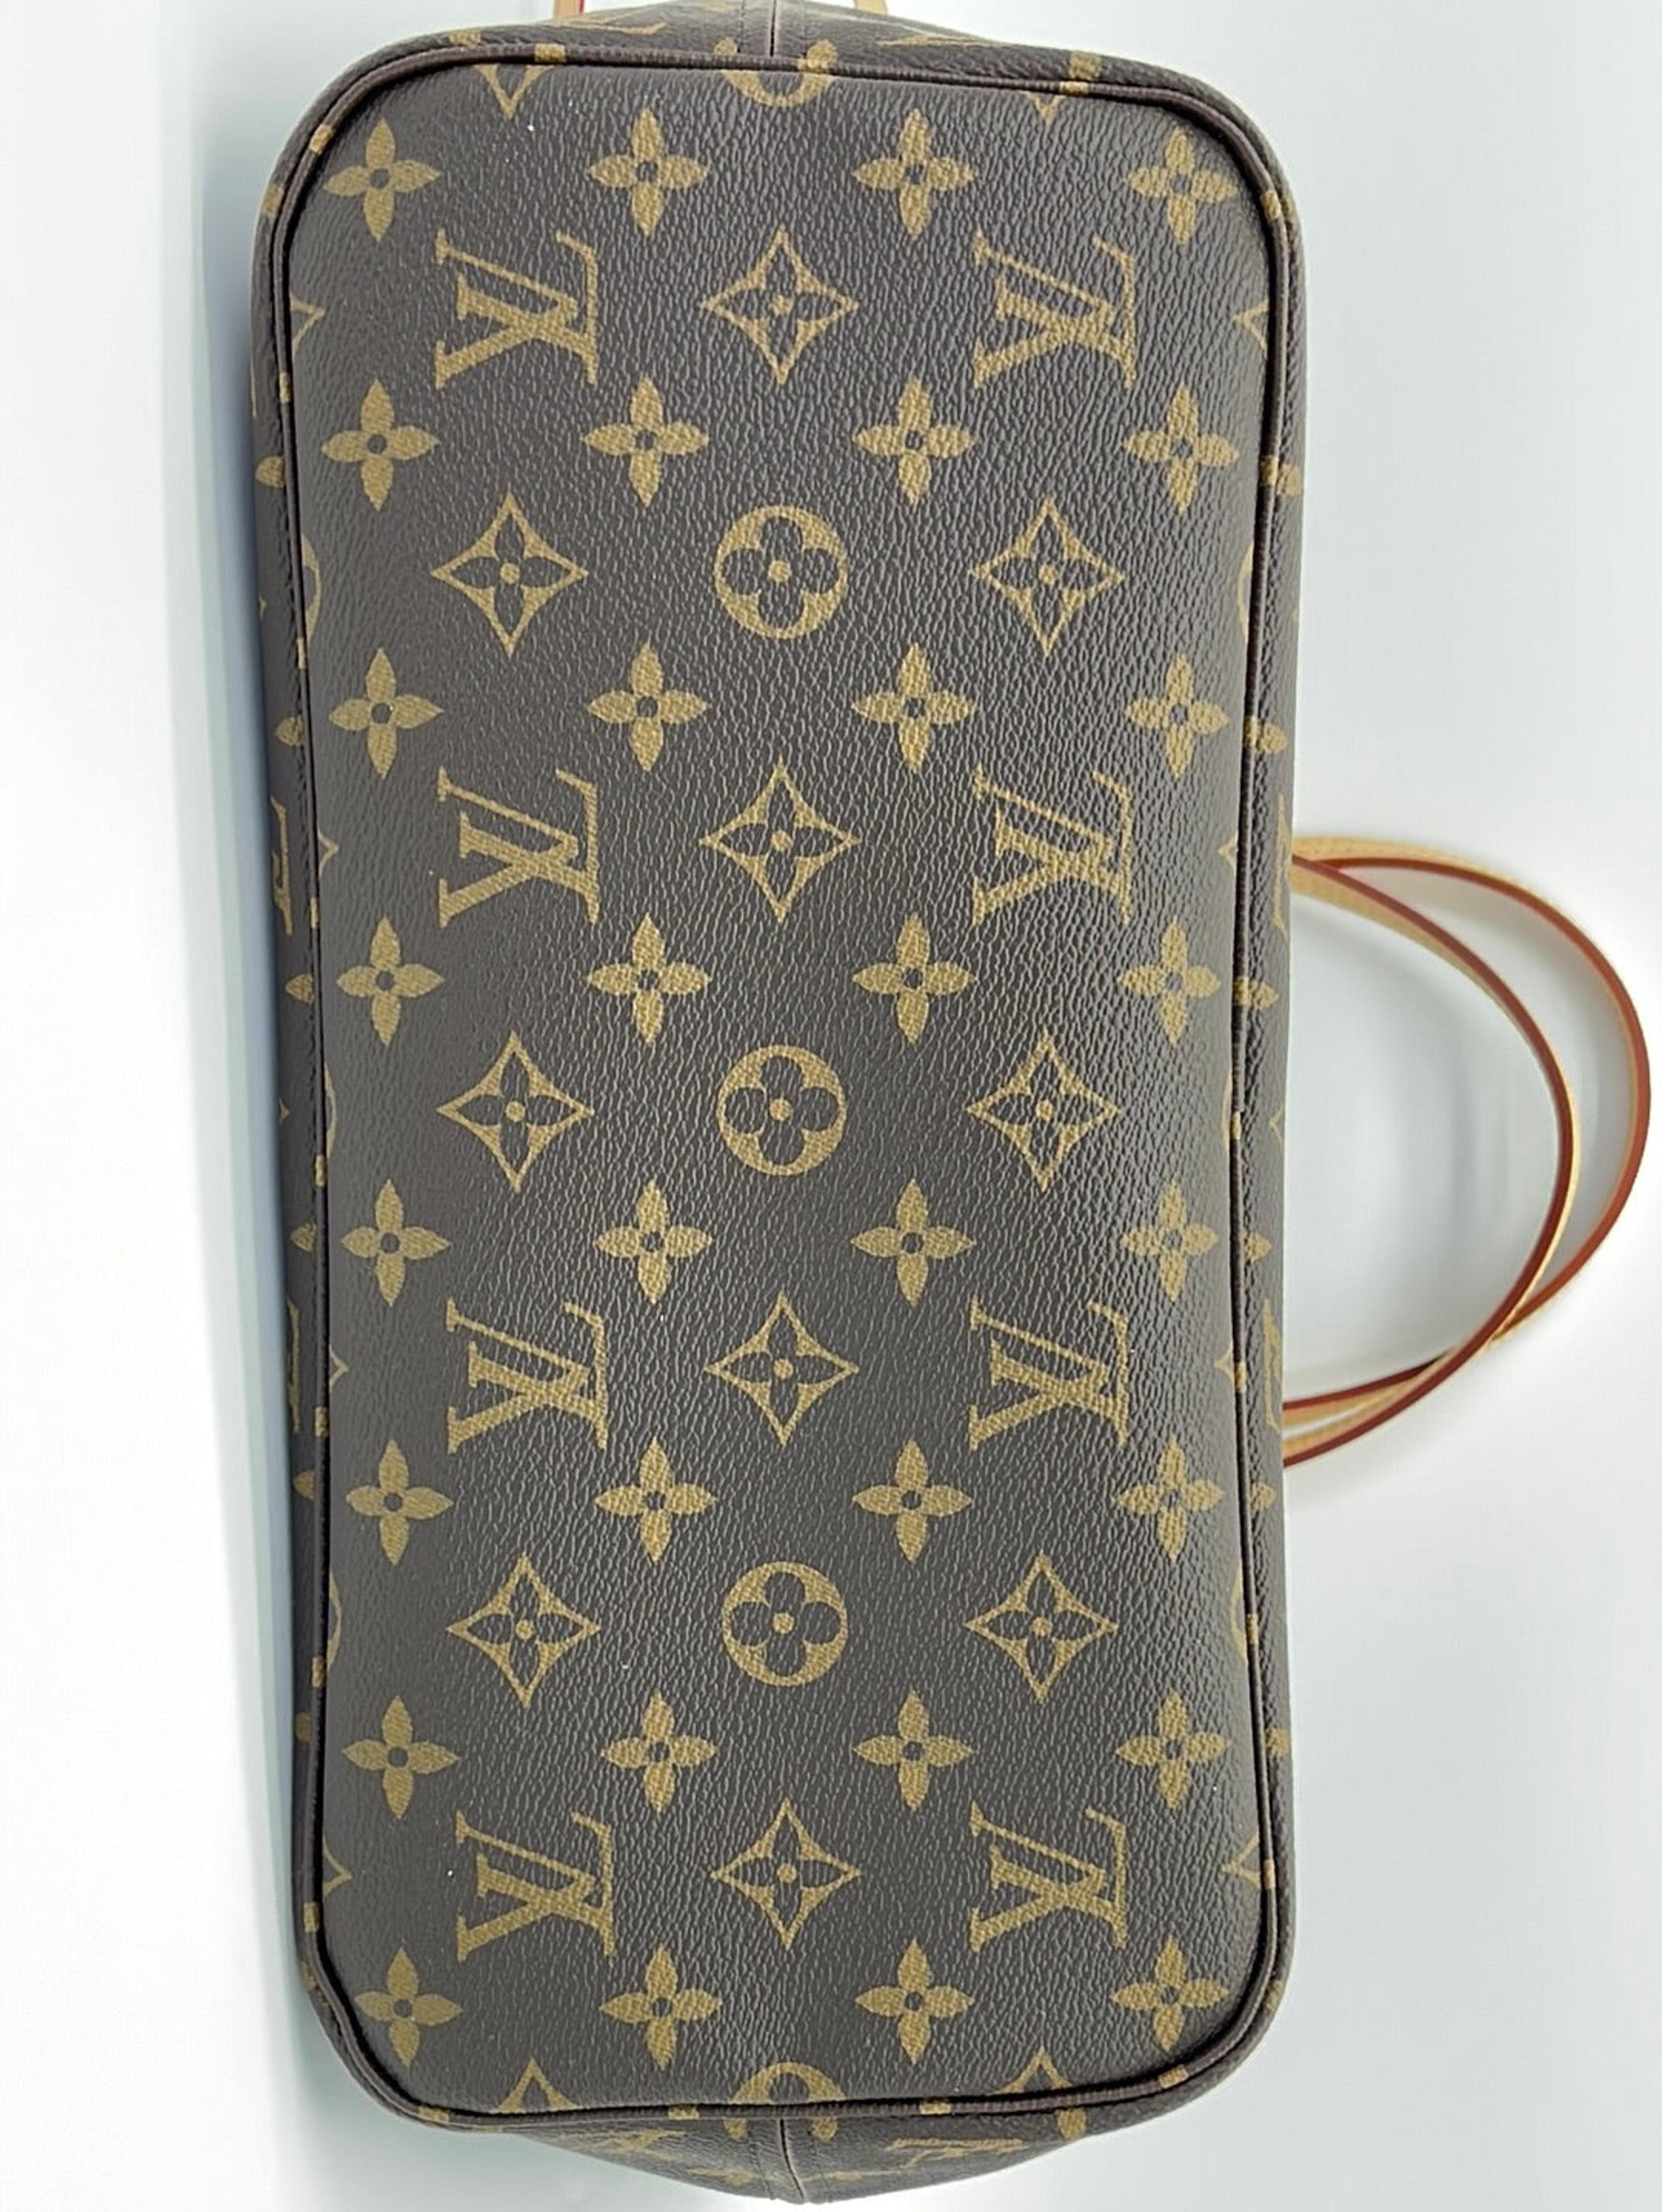 Preloved Louis Vuitton Monogram Neverfull MM Tote Bag (Tan Interior) S –  KimmieBBags LLC